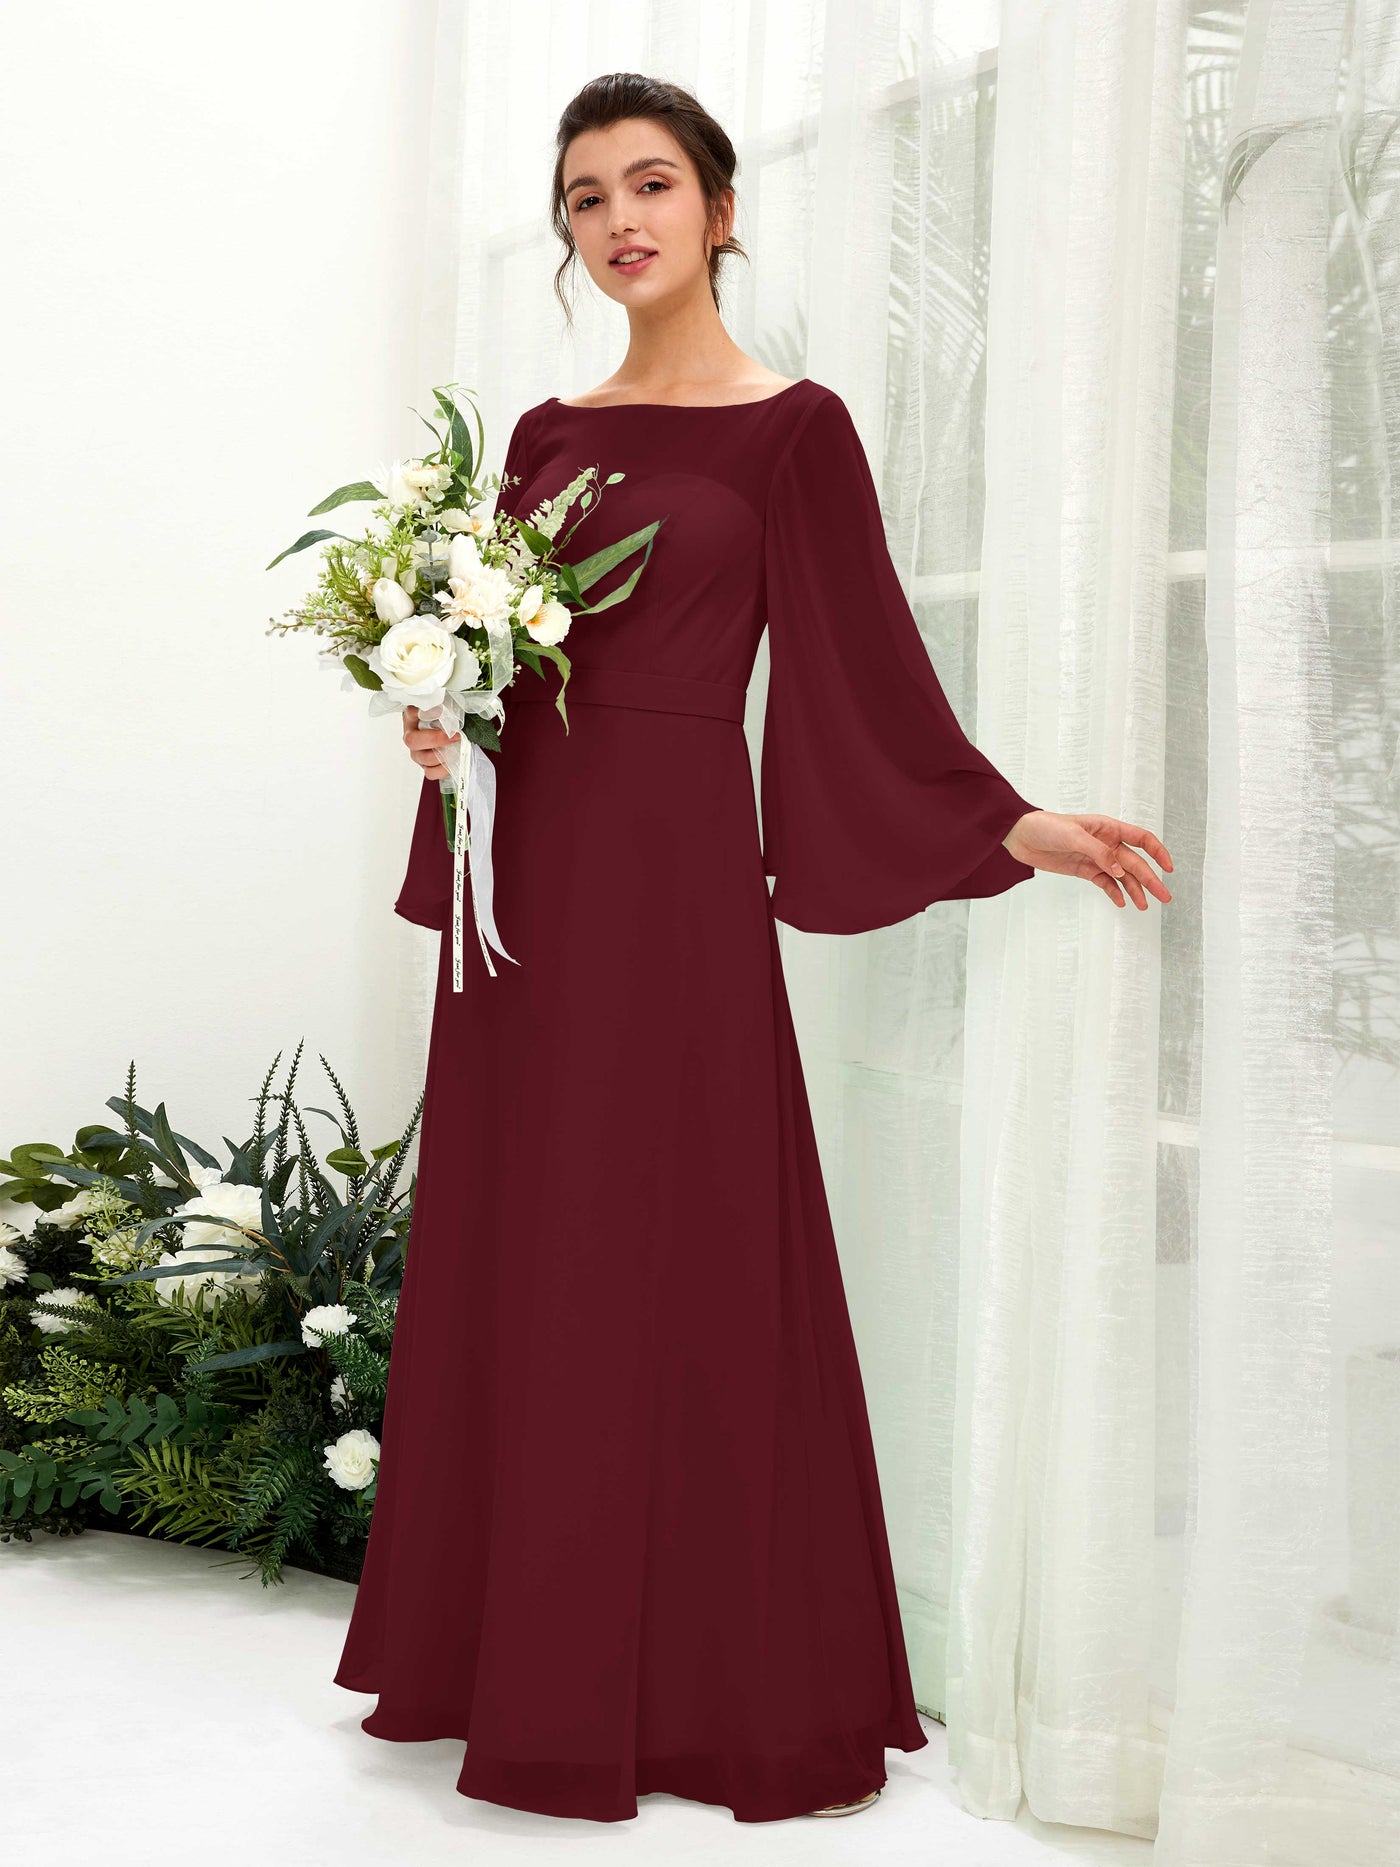 Blush Cinderella Divine CD0192 Long Sleeve Evening Formal Dress for $149.0  – The Dress Outlet